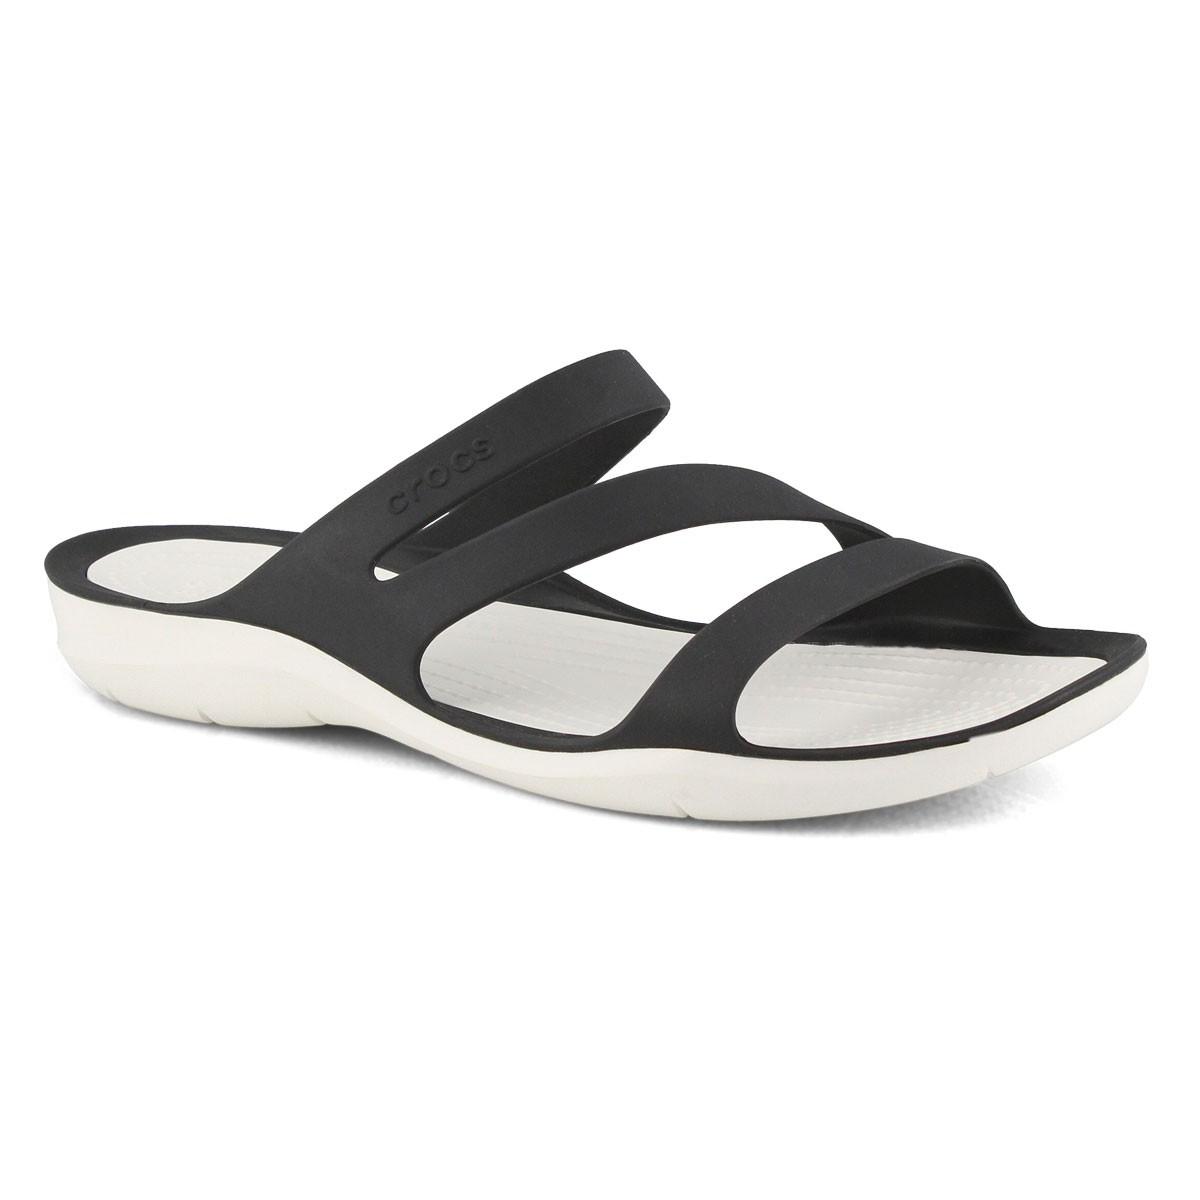 Crocs Women's Swiftwater Slide Sandal - Black | SoftMoc.com